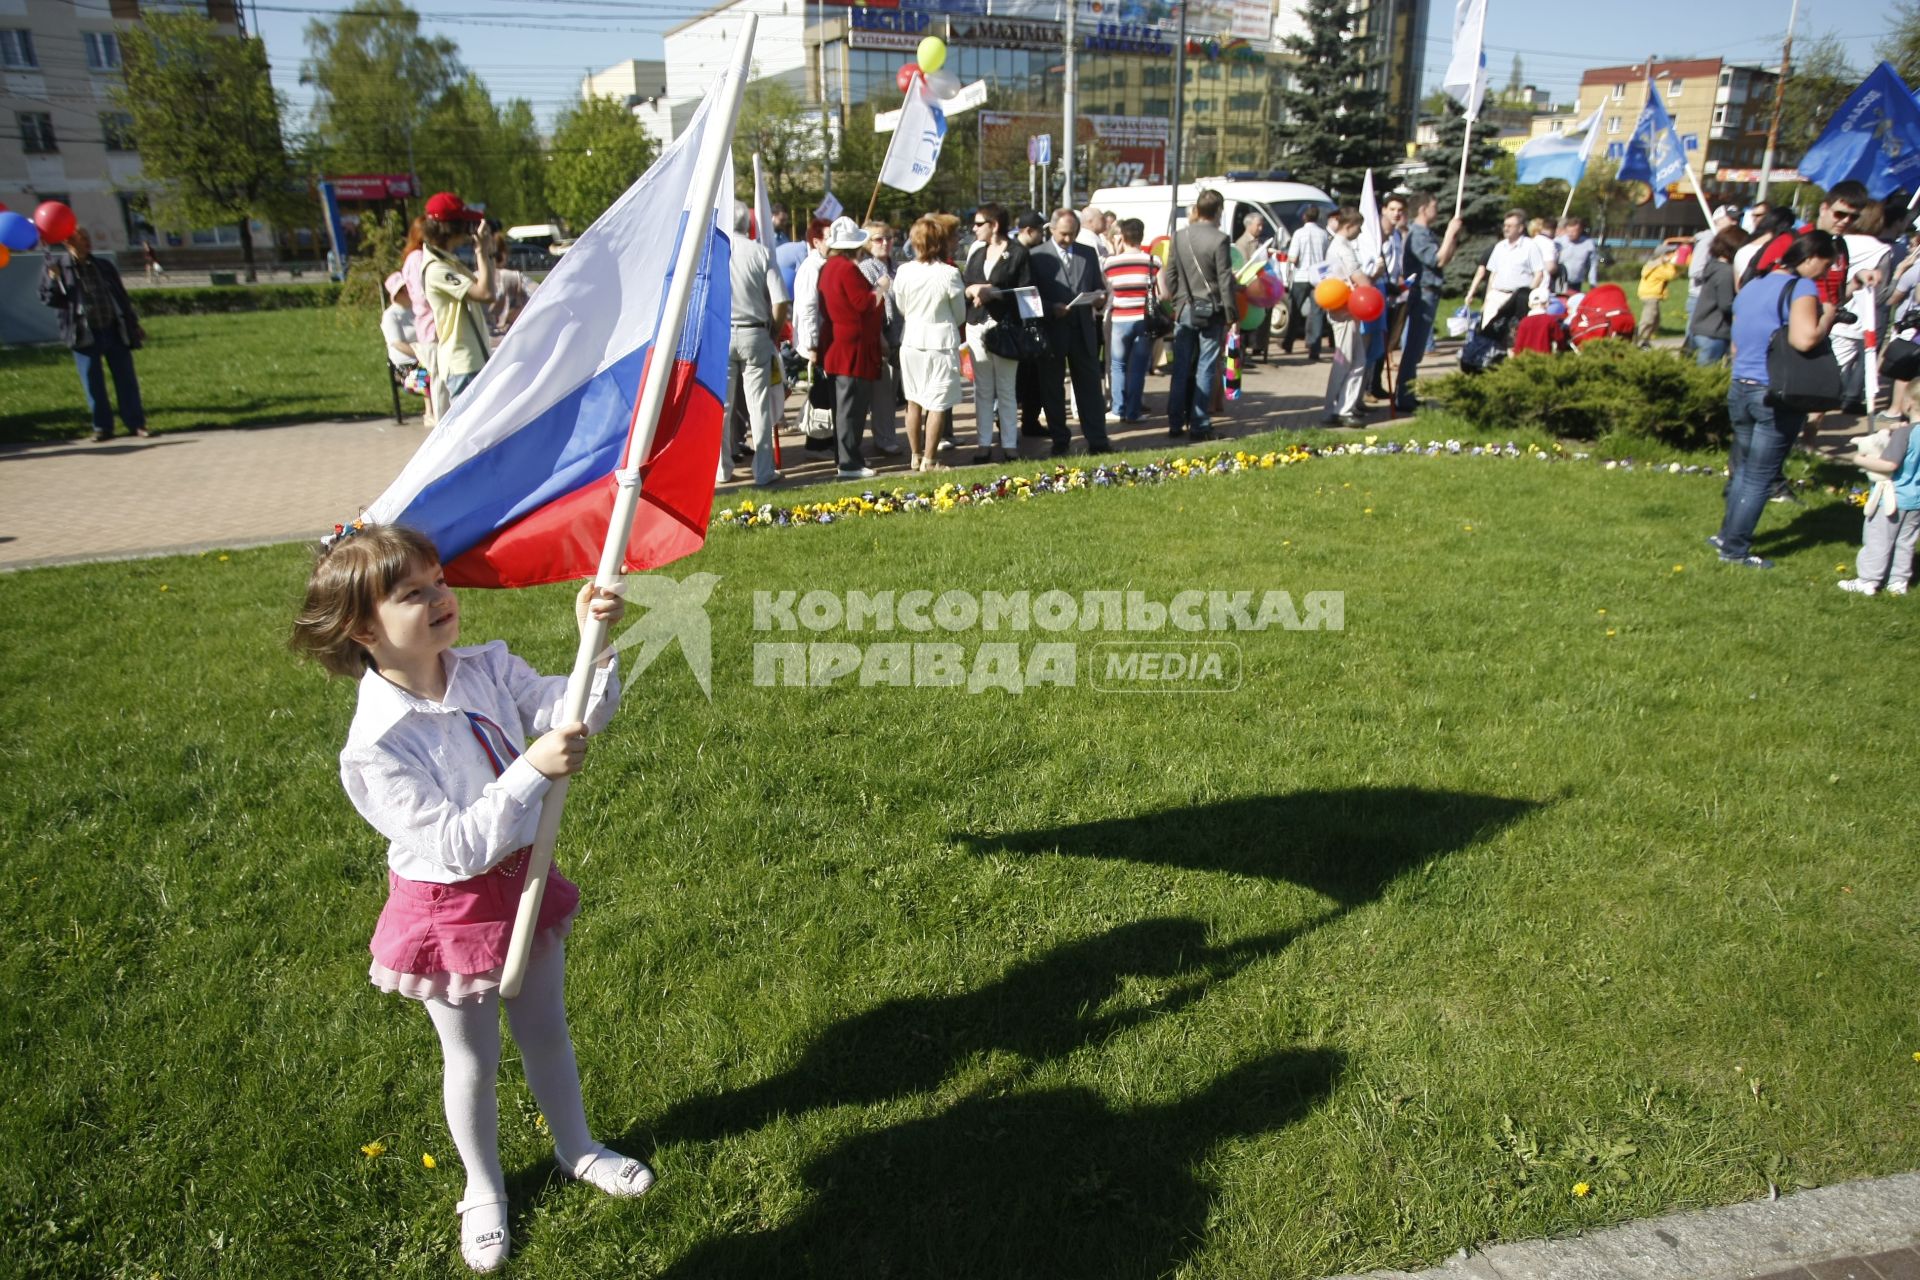 Ребенок с российским флагом стоит на газоне.